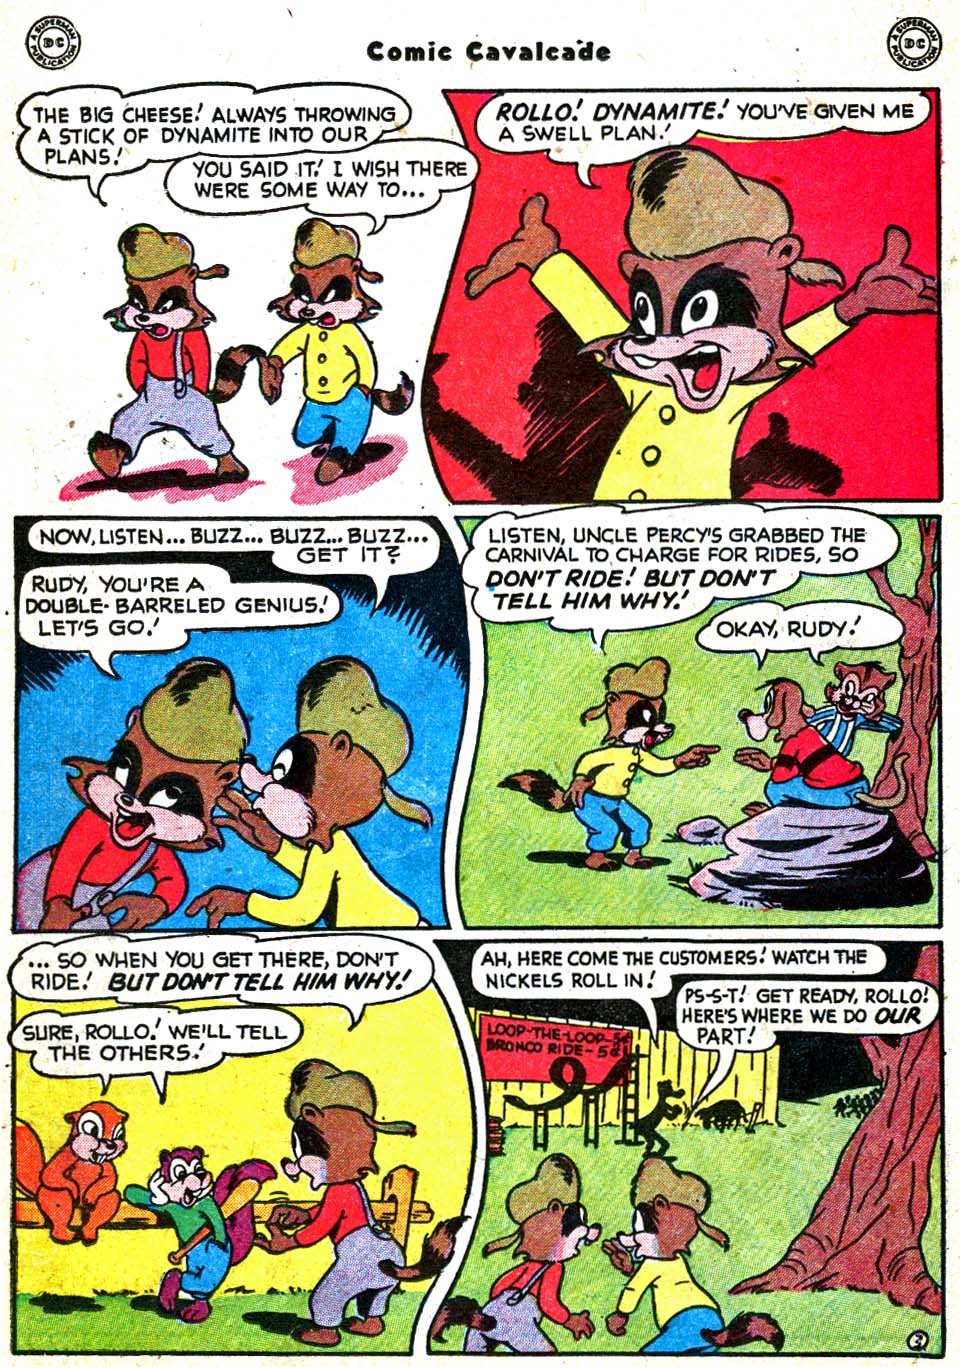 Comic Cavalcade issue 31 - Page 20